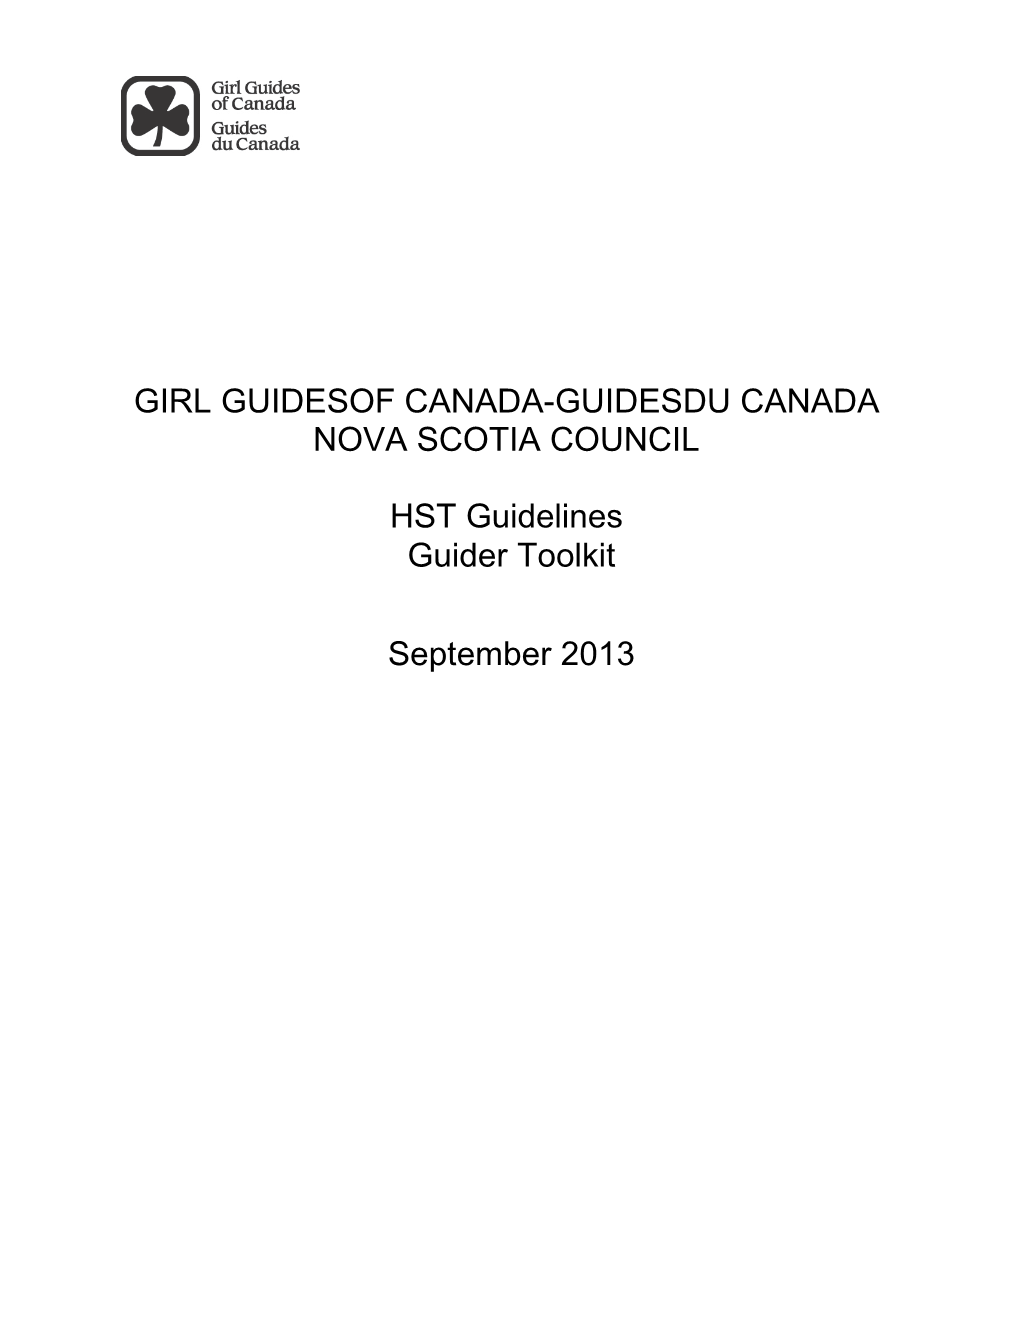 Girl Guidesof Canada-Guidesdu Canada Nova Scotia Council